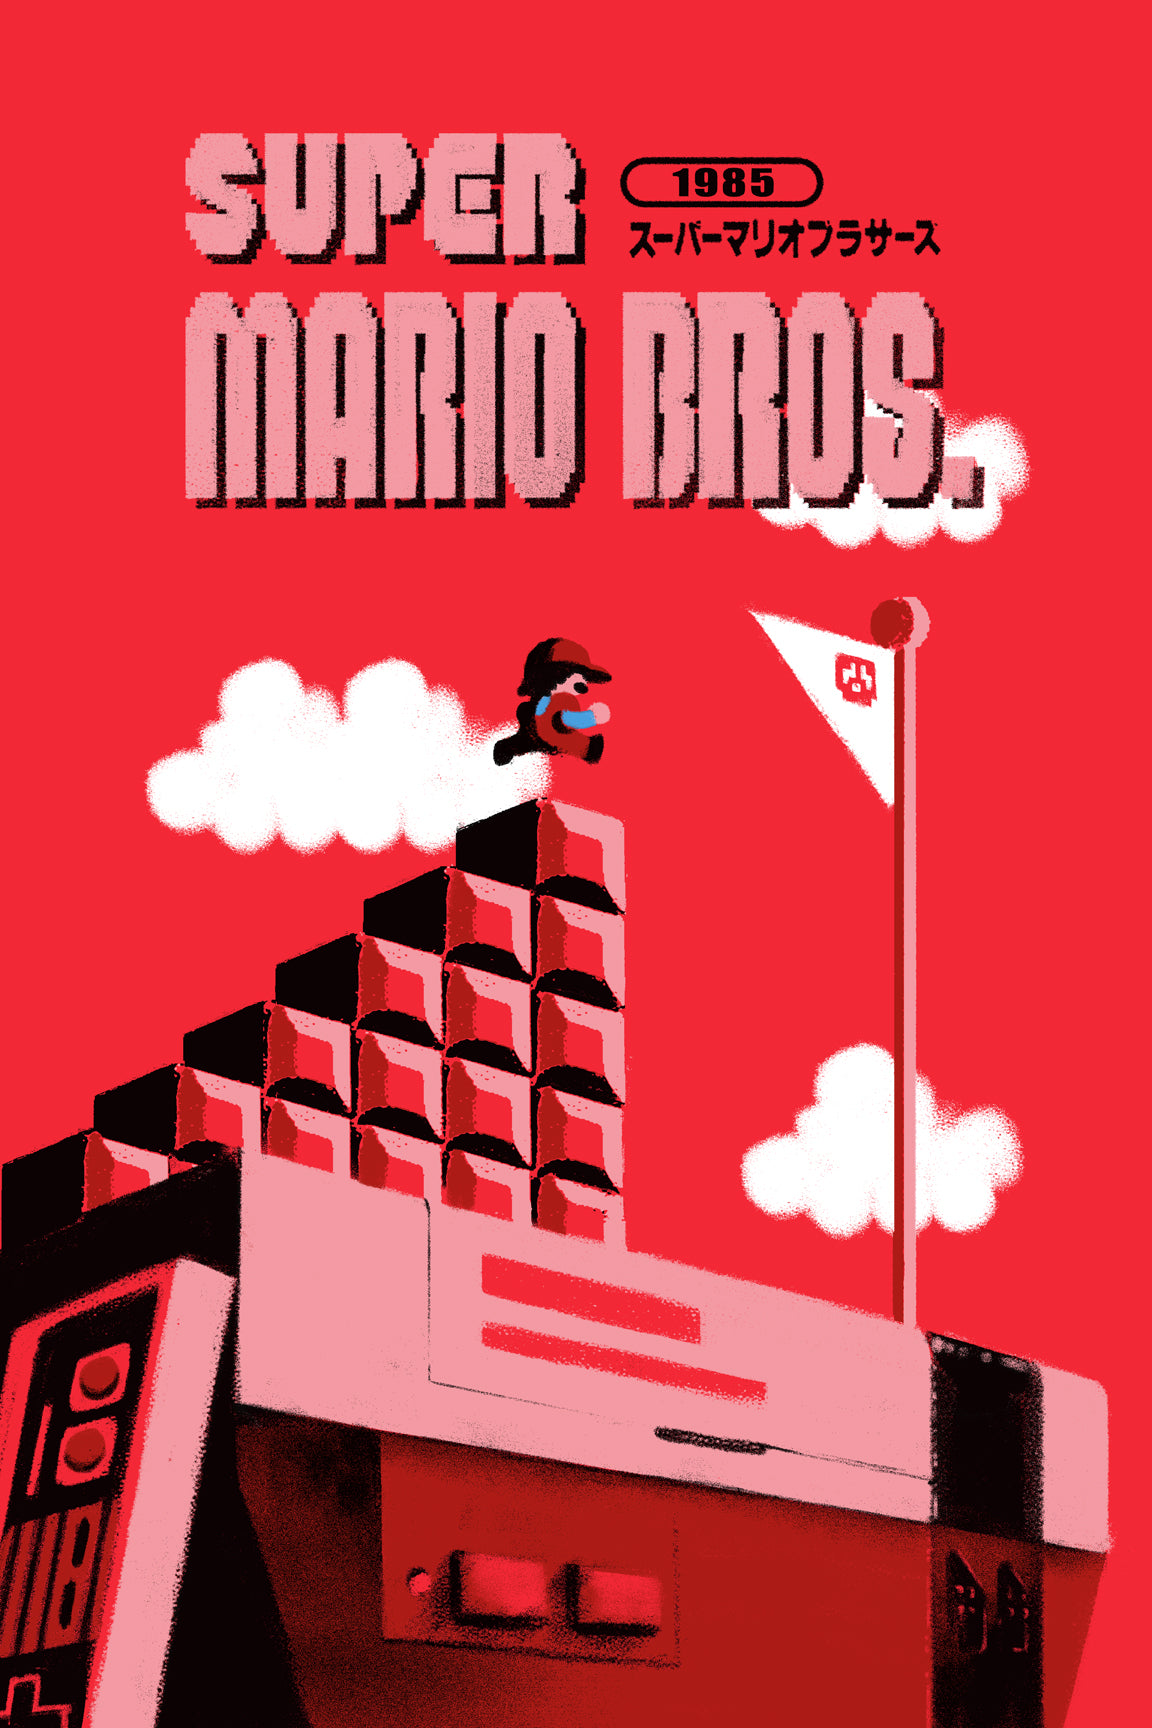 Lyndon Willoughby "Super Mario Bros."